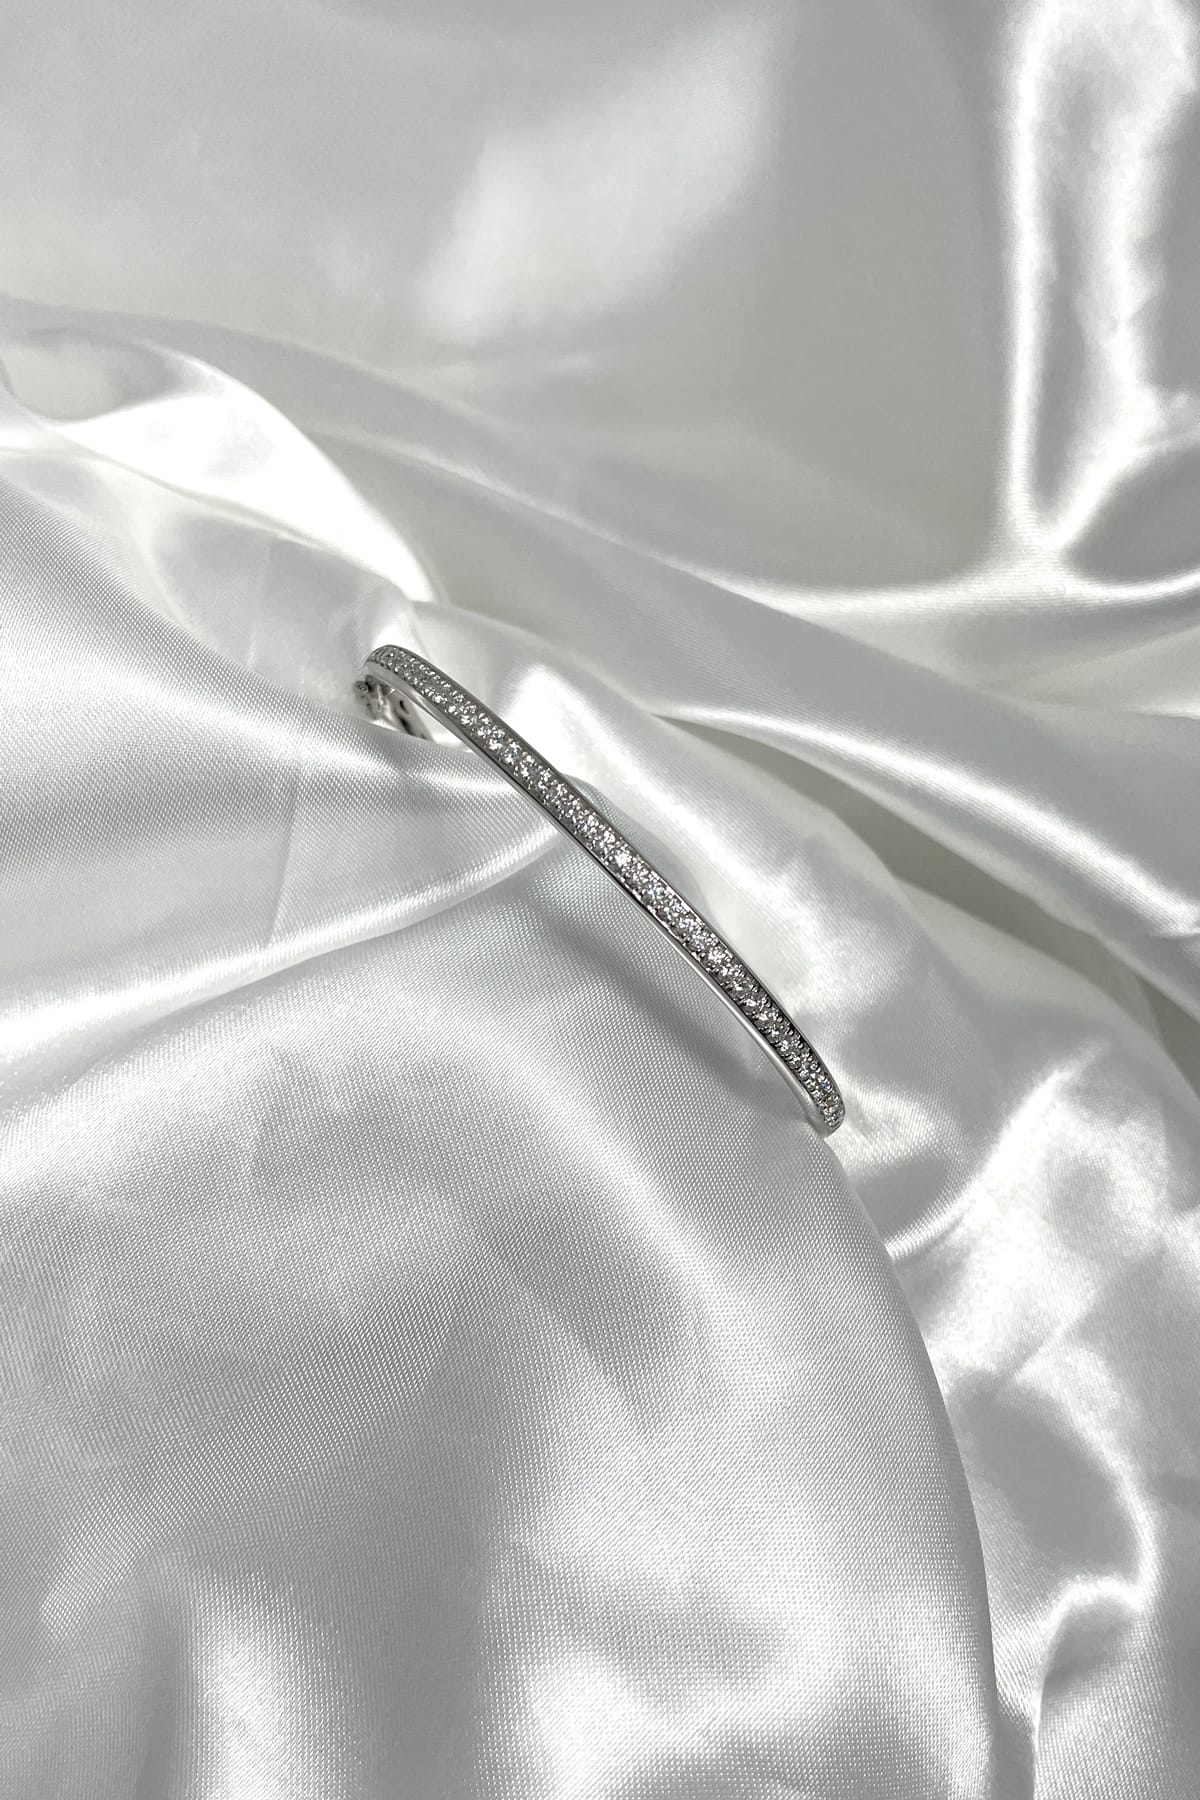 White Gold Oval Hinged Diamond Set Bangle available at LeGassick Diamonds and Jewellery Gold Coast, Australia.